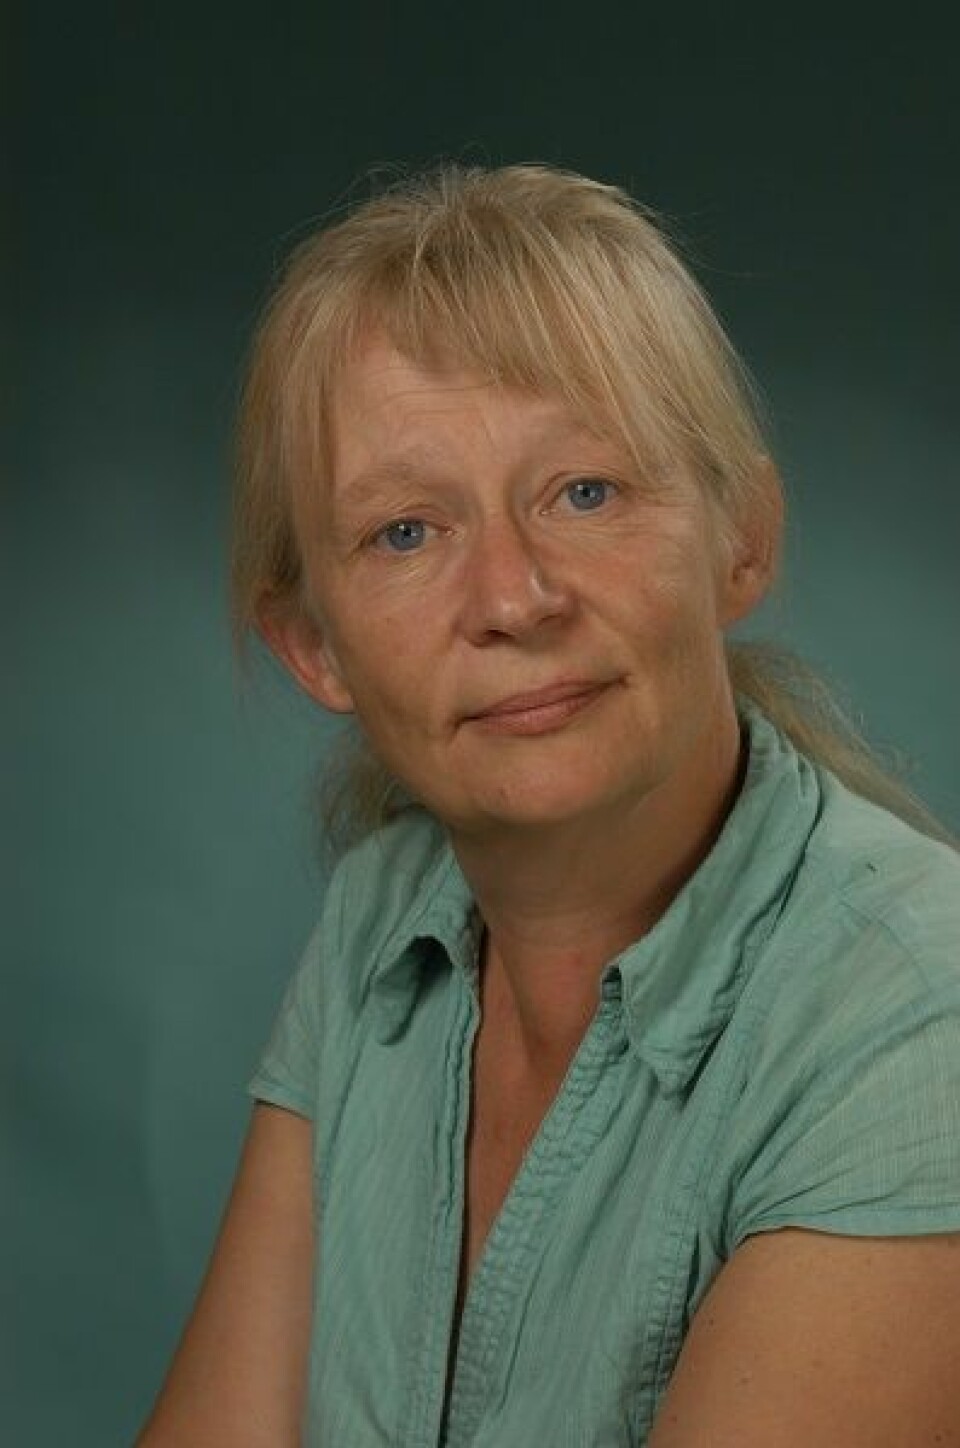 Kristina Bjureke er botaniker og universitetslektor ved Naturhistorisk museum i Oslo. (Foto: UiO)